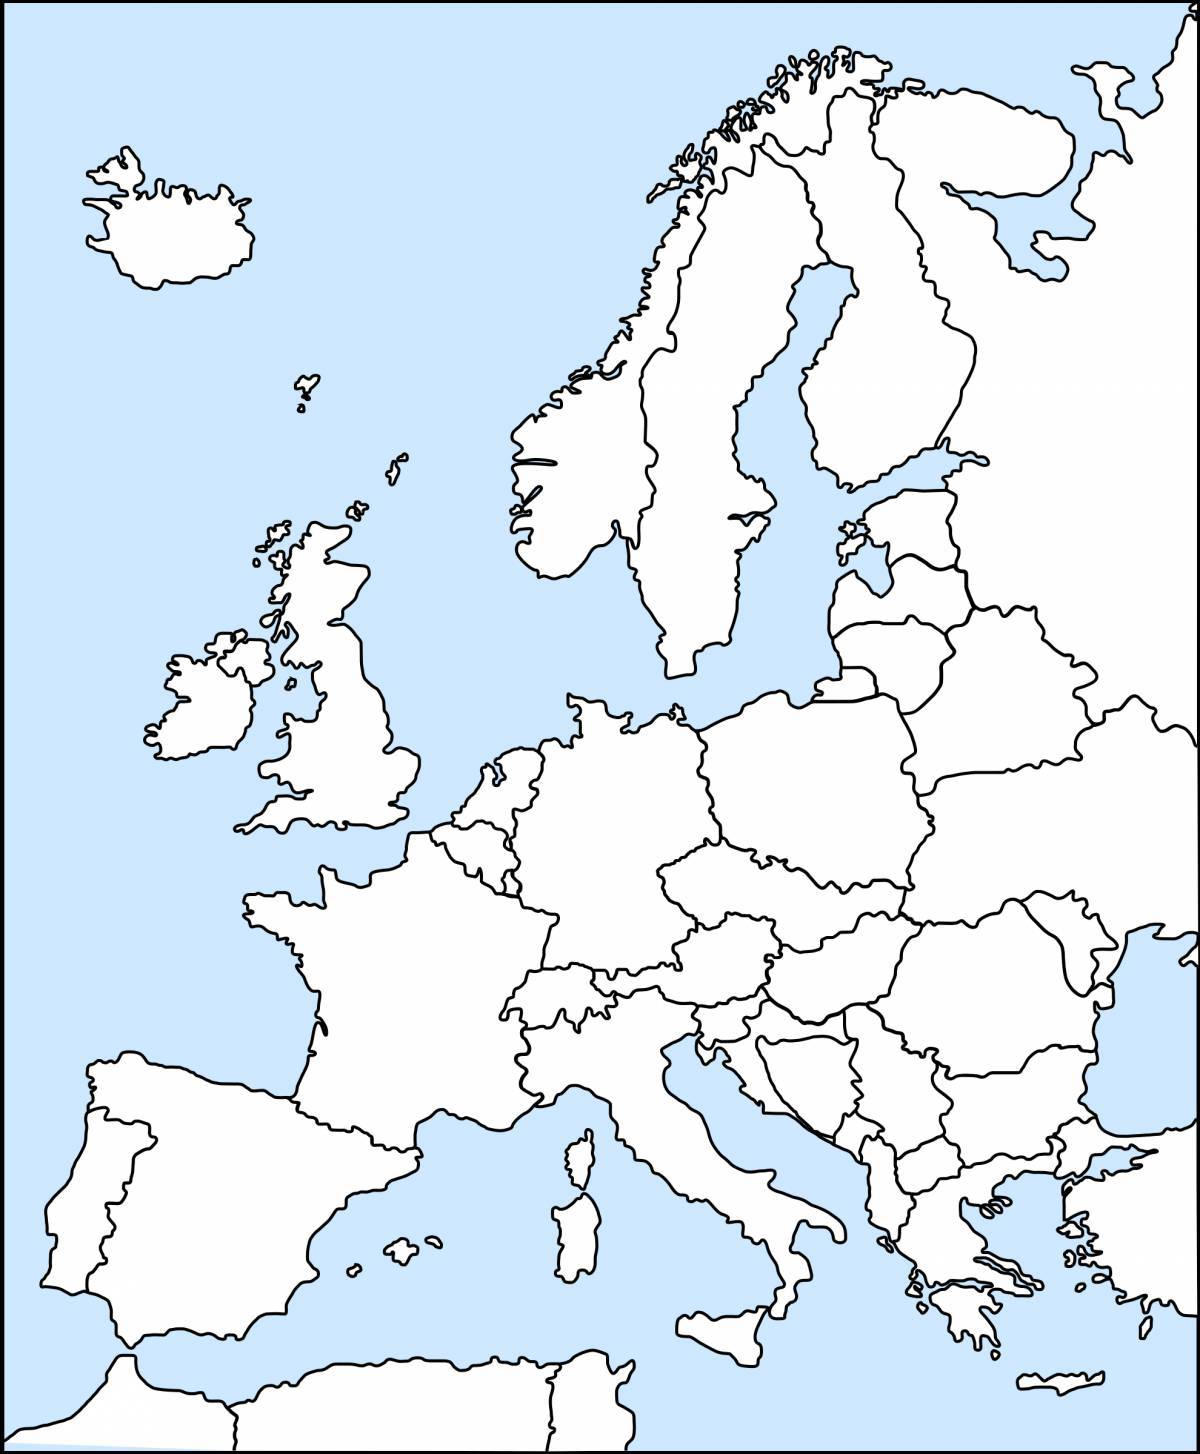 Shinning map of europe